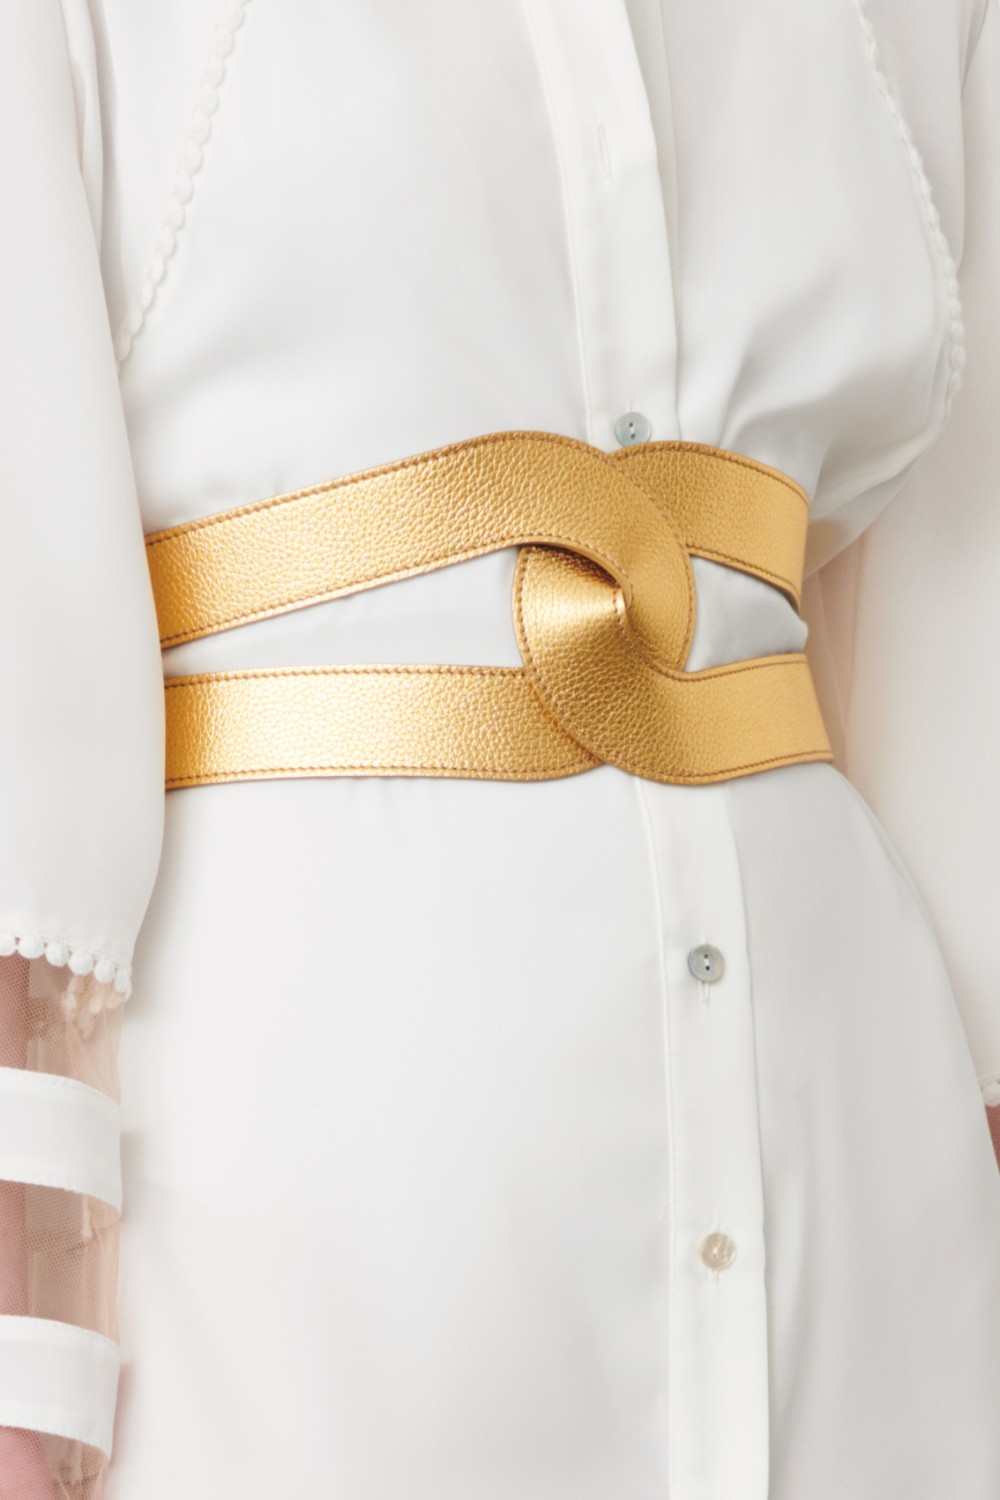 Noleggio Abbigliamento Firmato - Gold leather belt - Maison Vaincourt - Drexcode -2